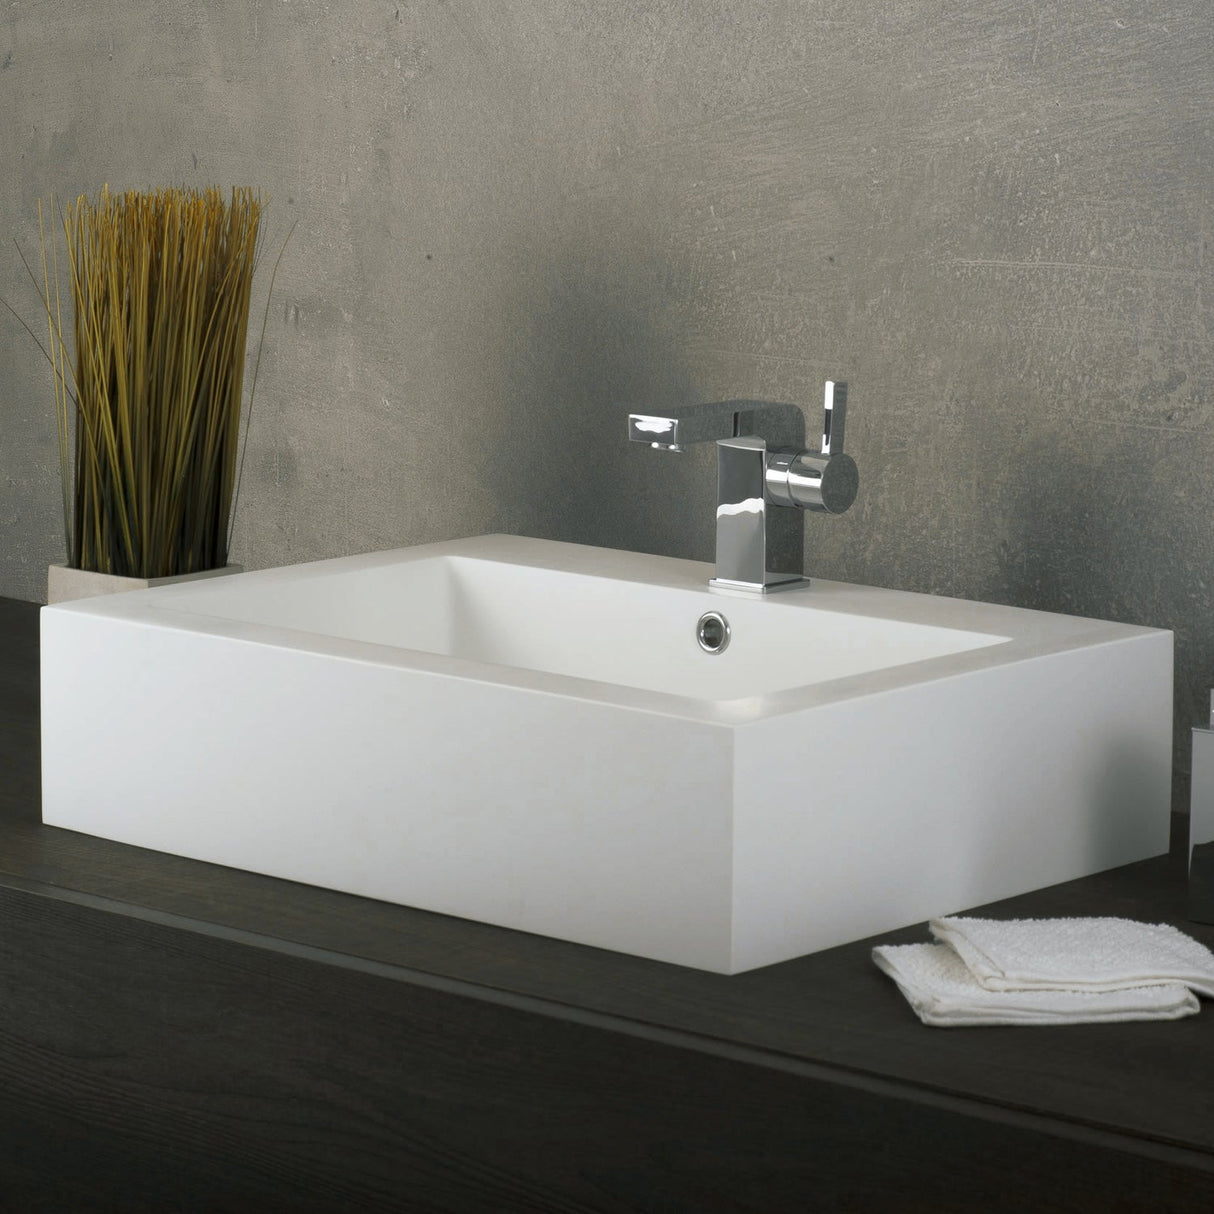 DAX Solid Surface Rectangular Single Bowl Vessel Bathroom Basin, Matte White DAX-AB-032